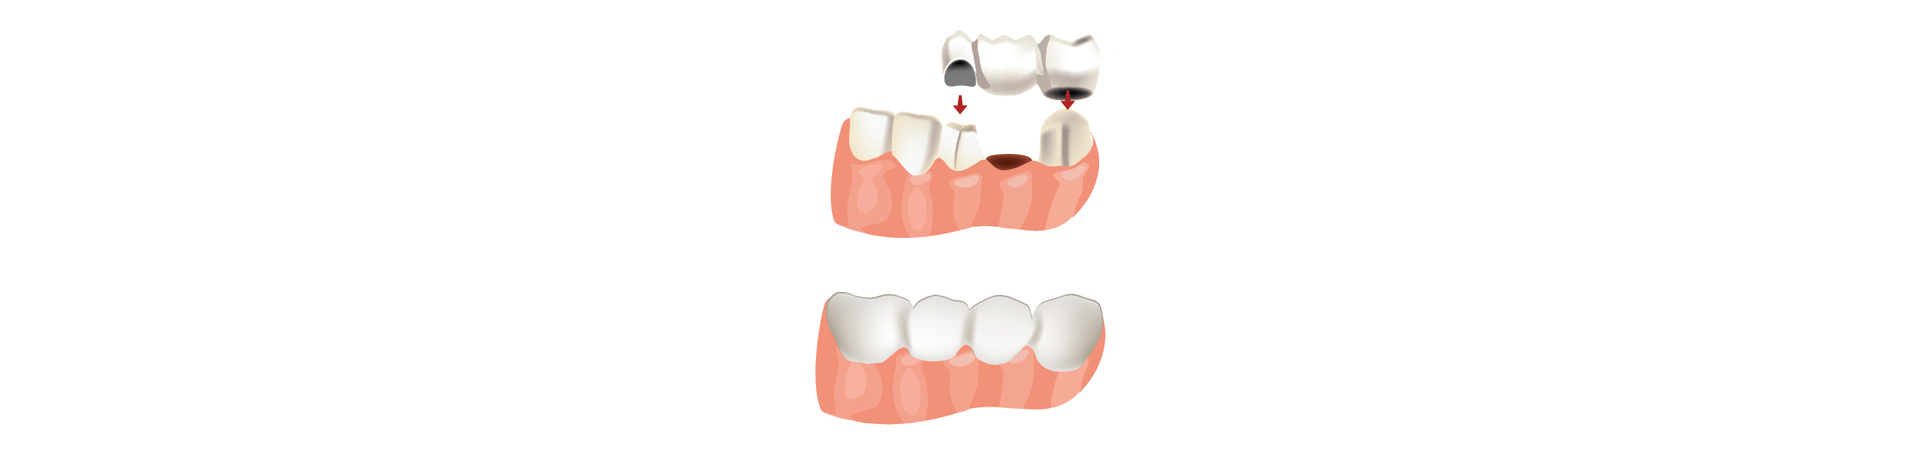 Dental Bridges Explanation